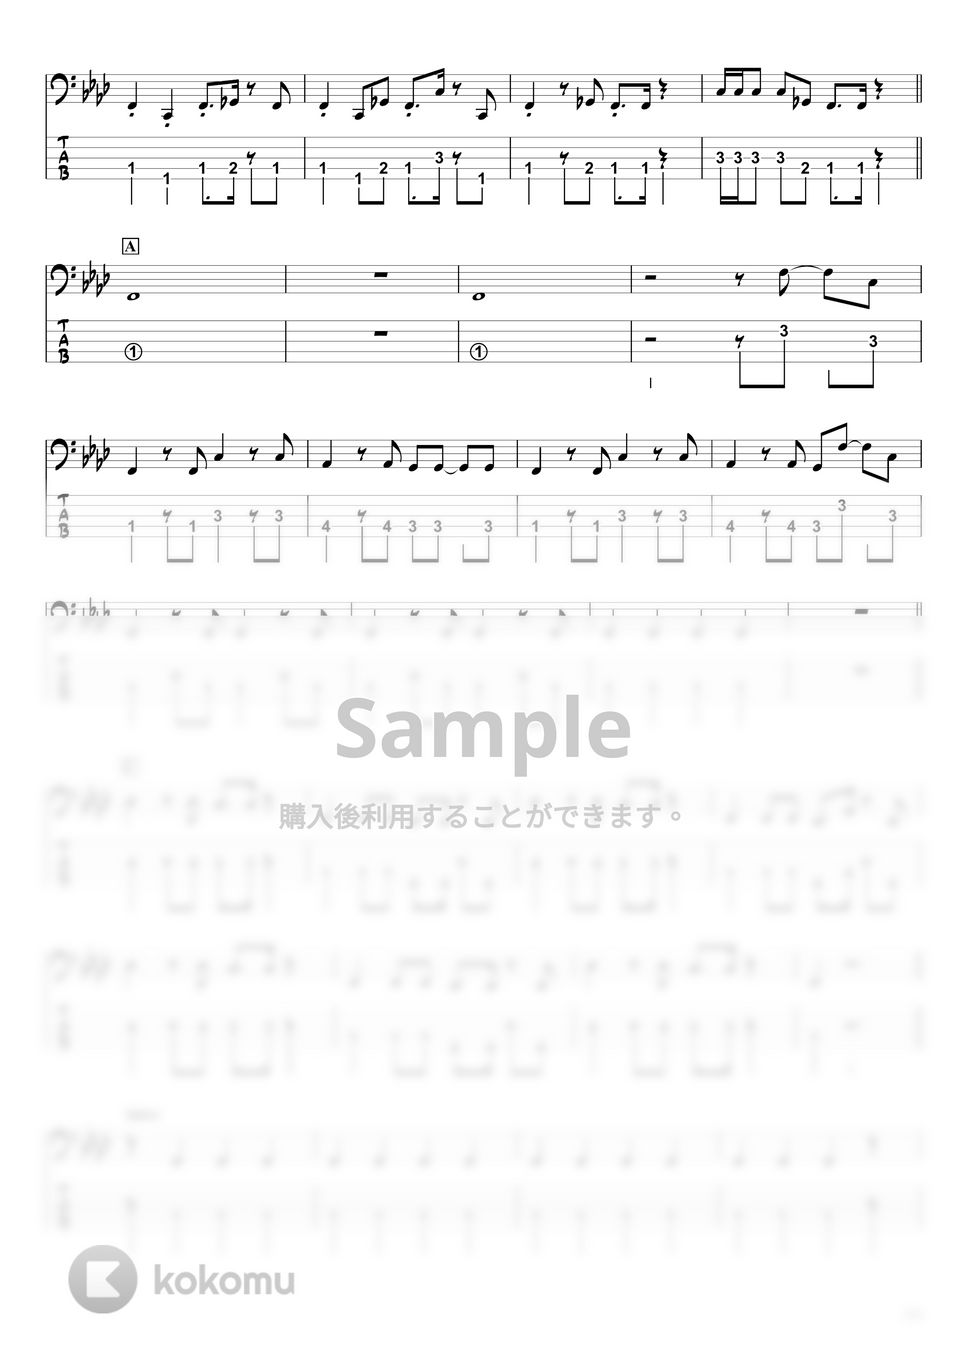 Ado - 踊 (ベースTAB譜☆5弦ベース対応) by swbass